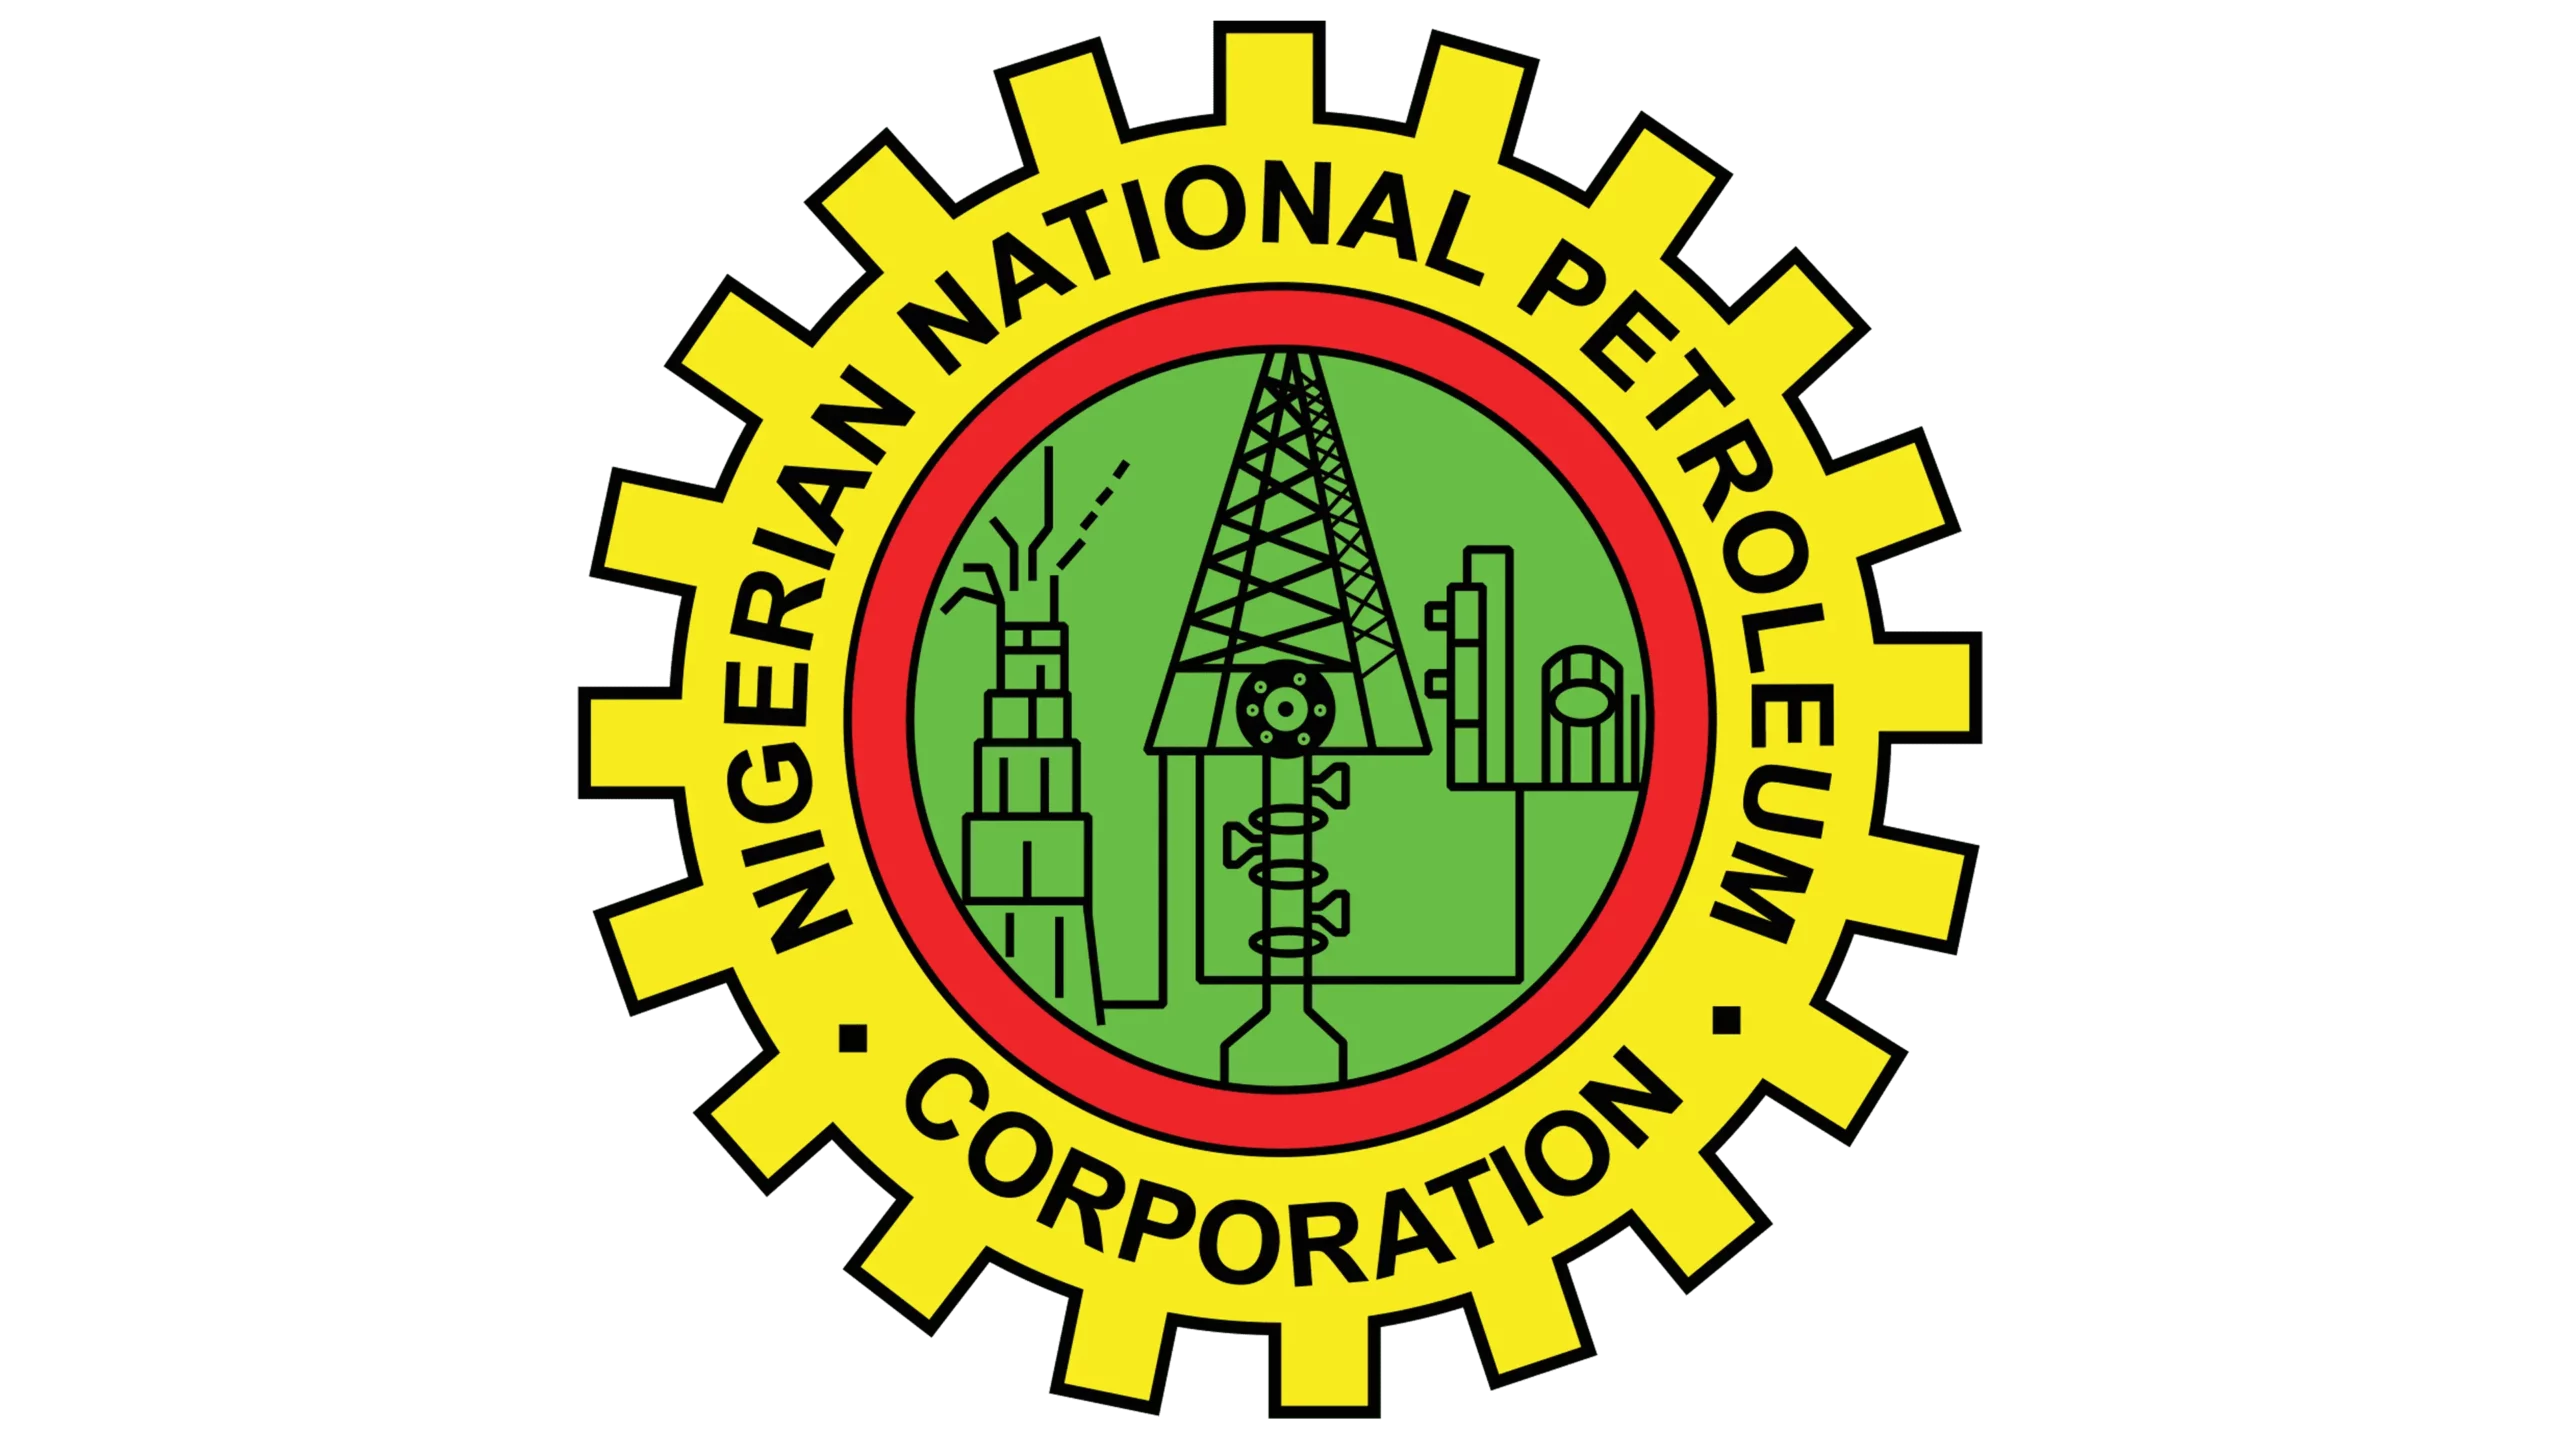 History of Nigerian National Petroleum Corporation